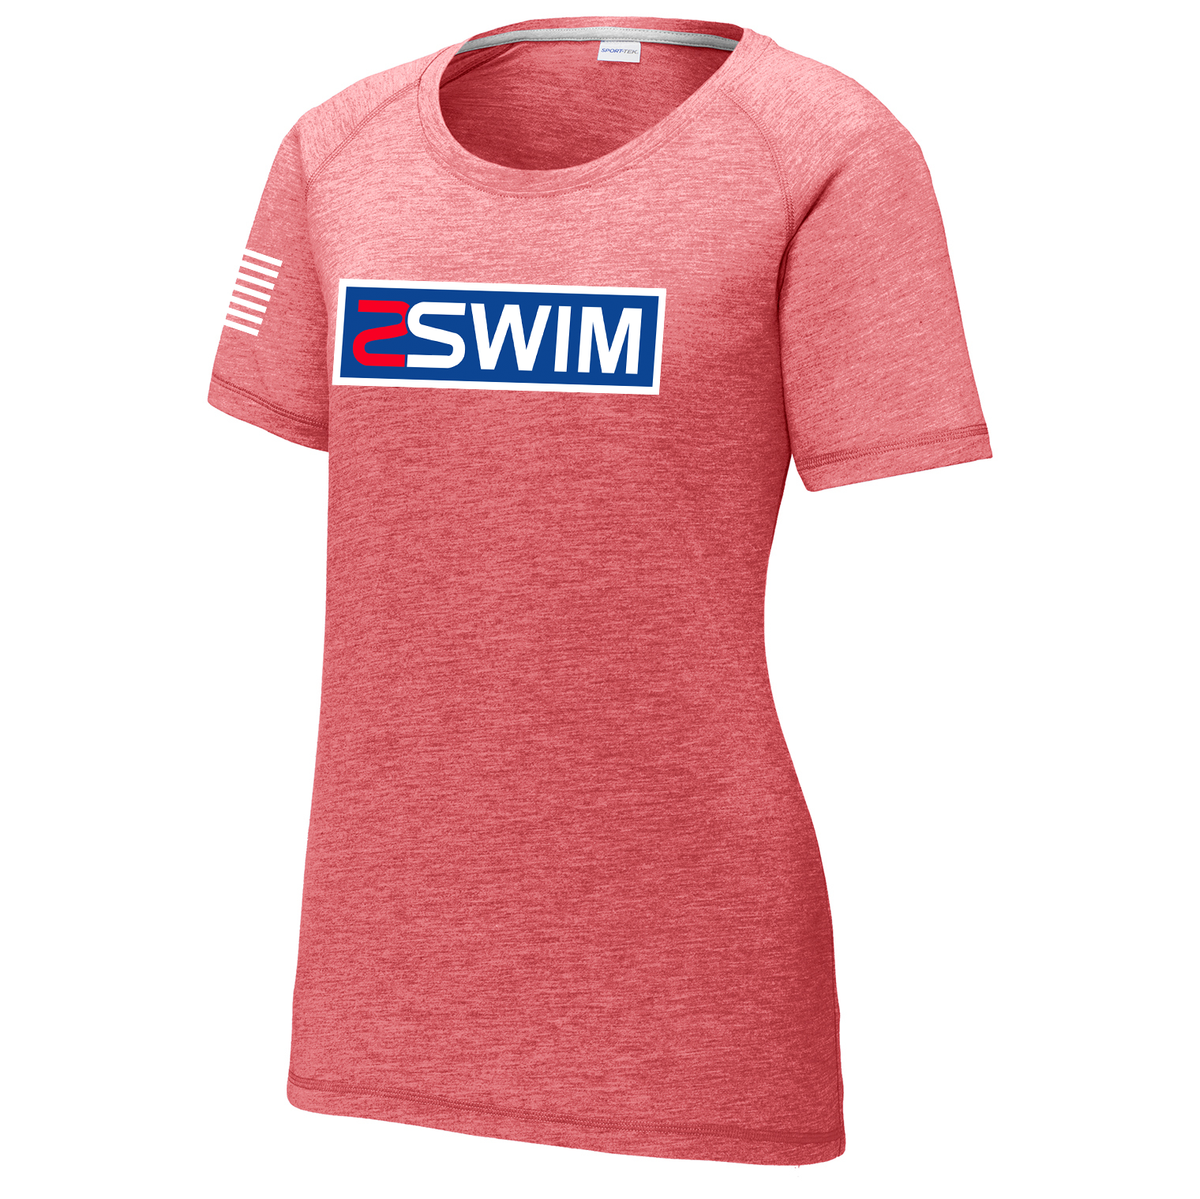 Skudin Swim Women's Raglan CottonTouch